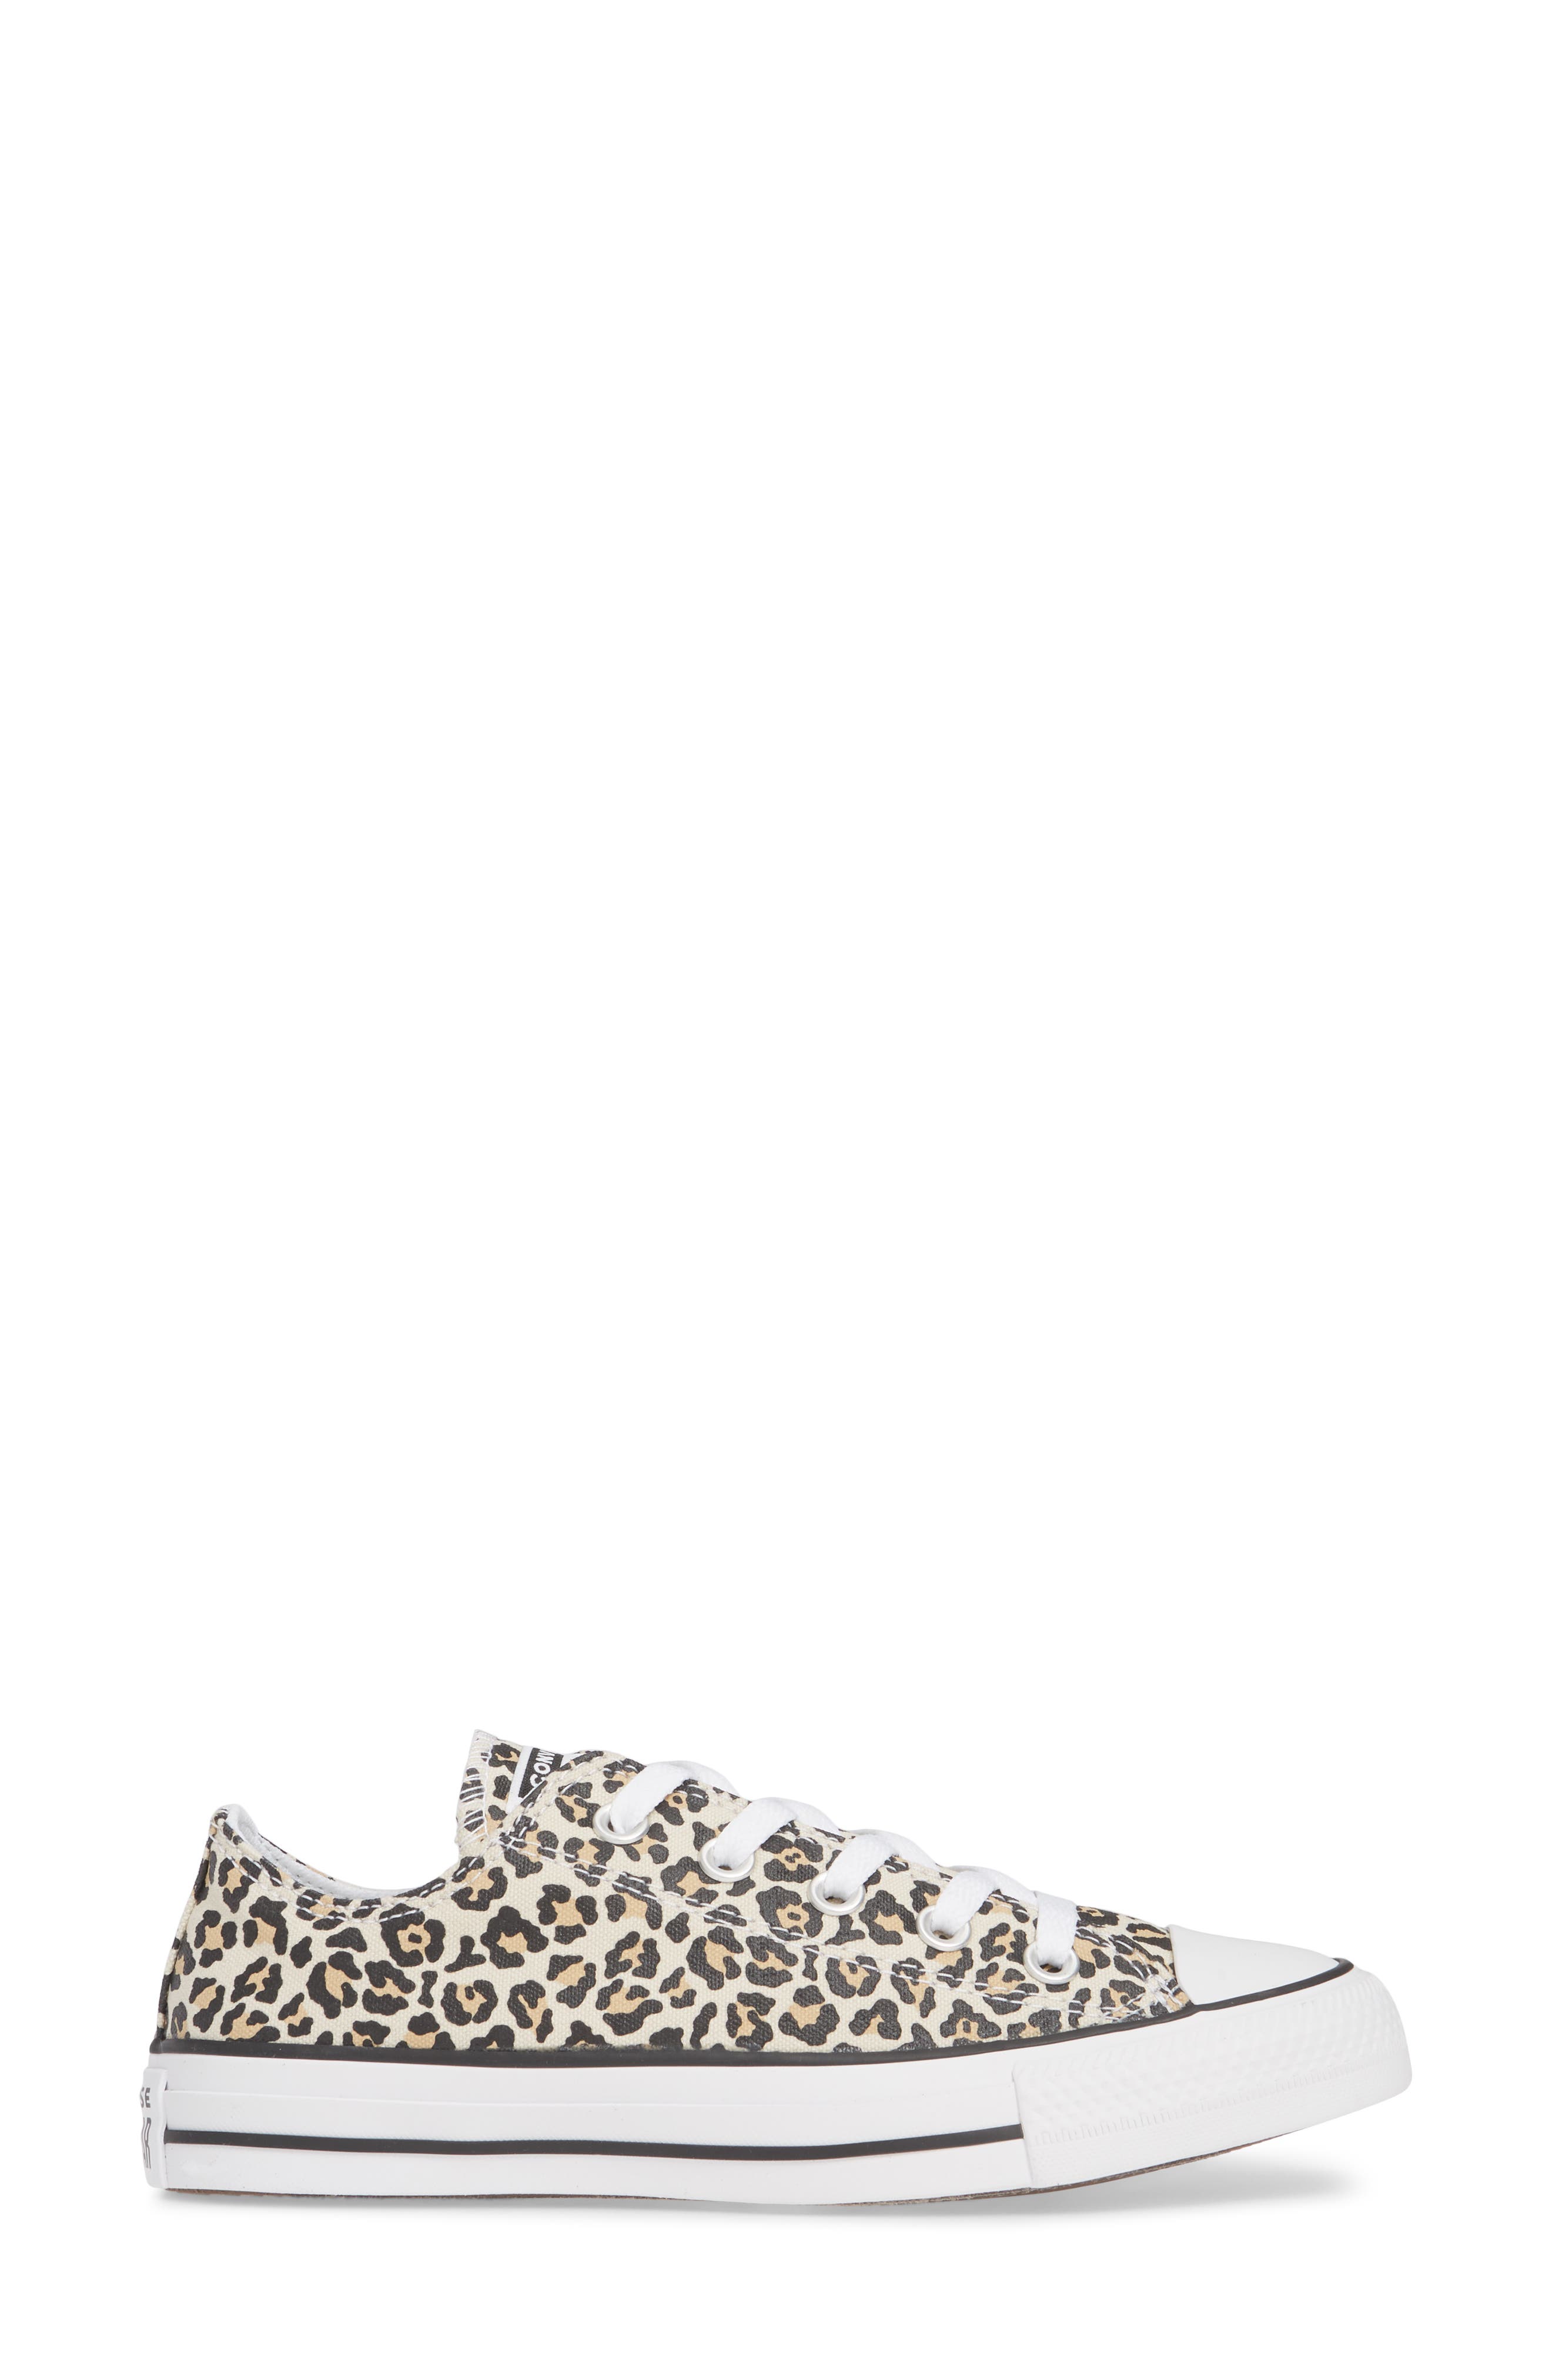 womens leopard converse sneakers